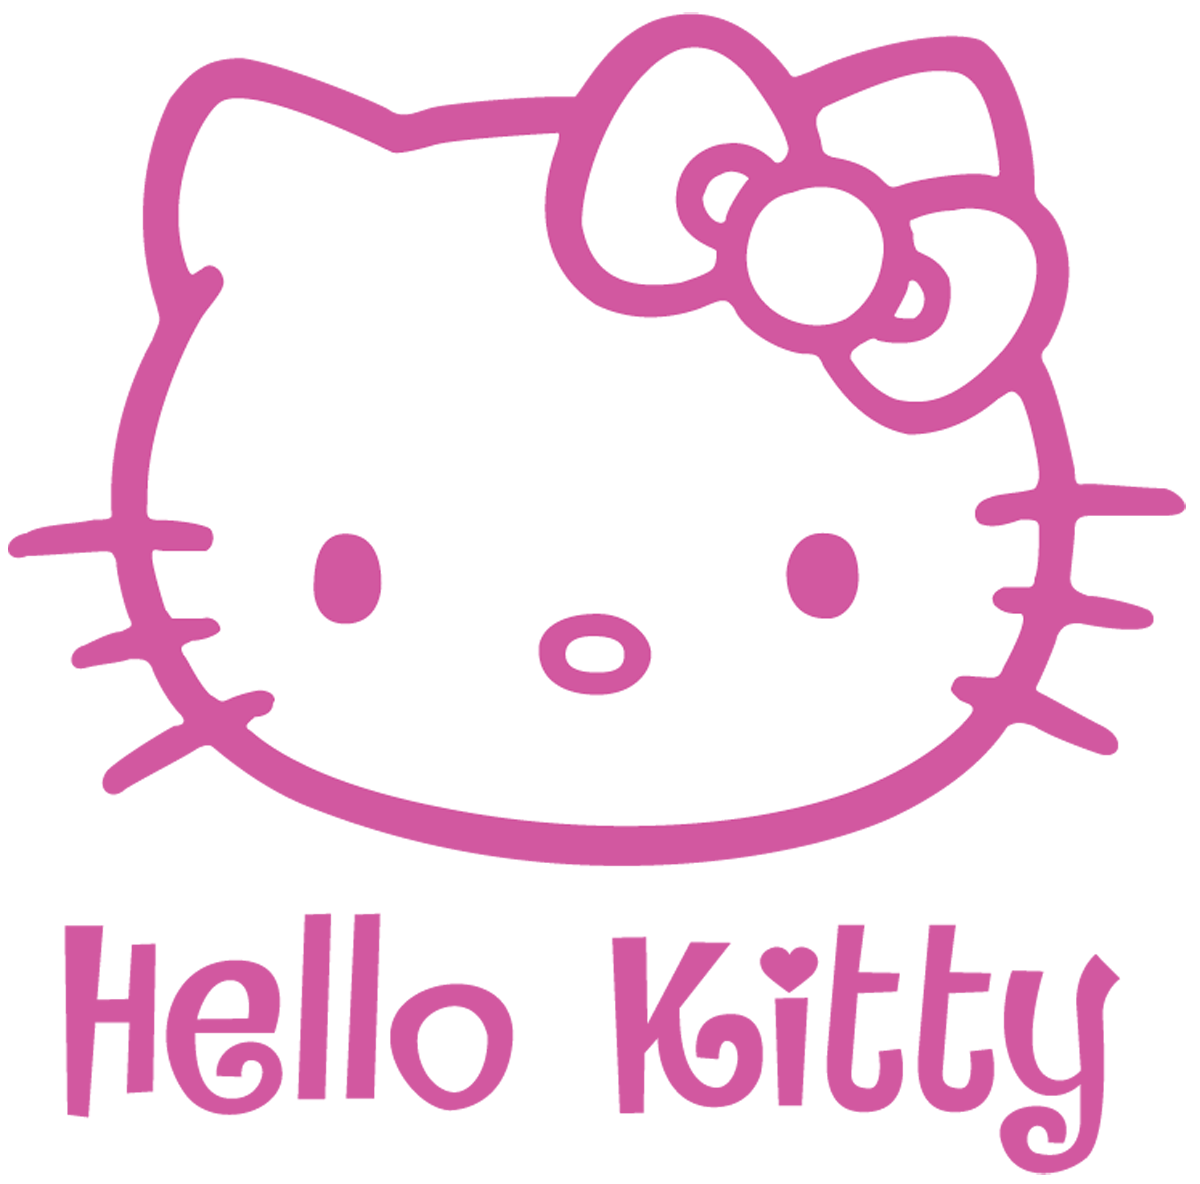 Hello Kitty Logo Wallpaper